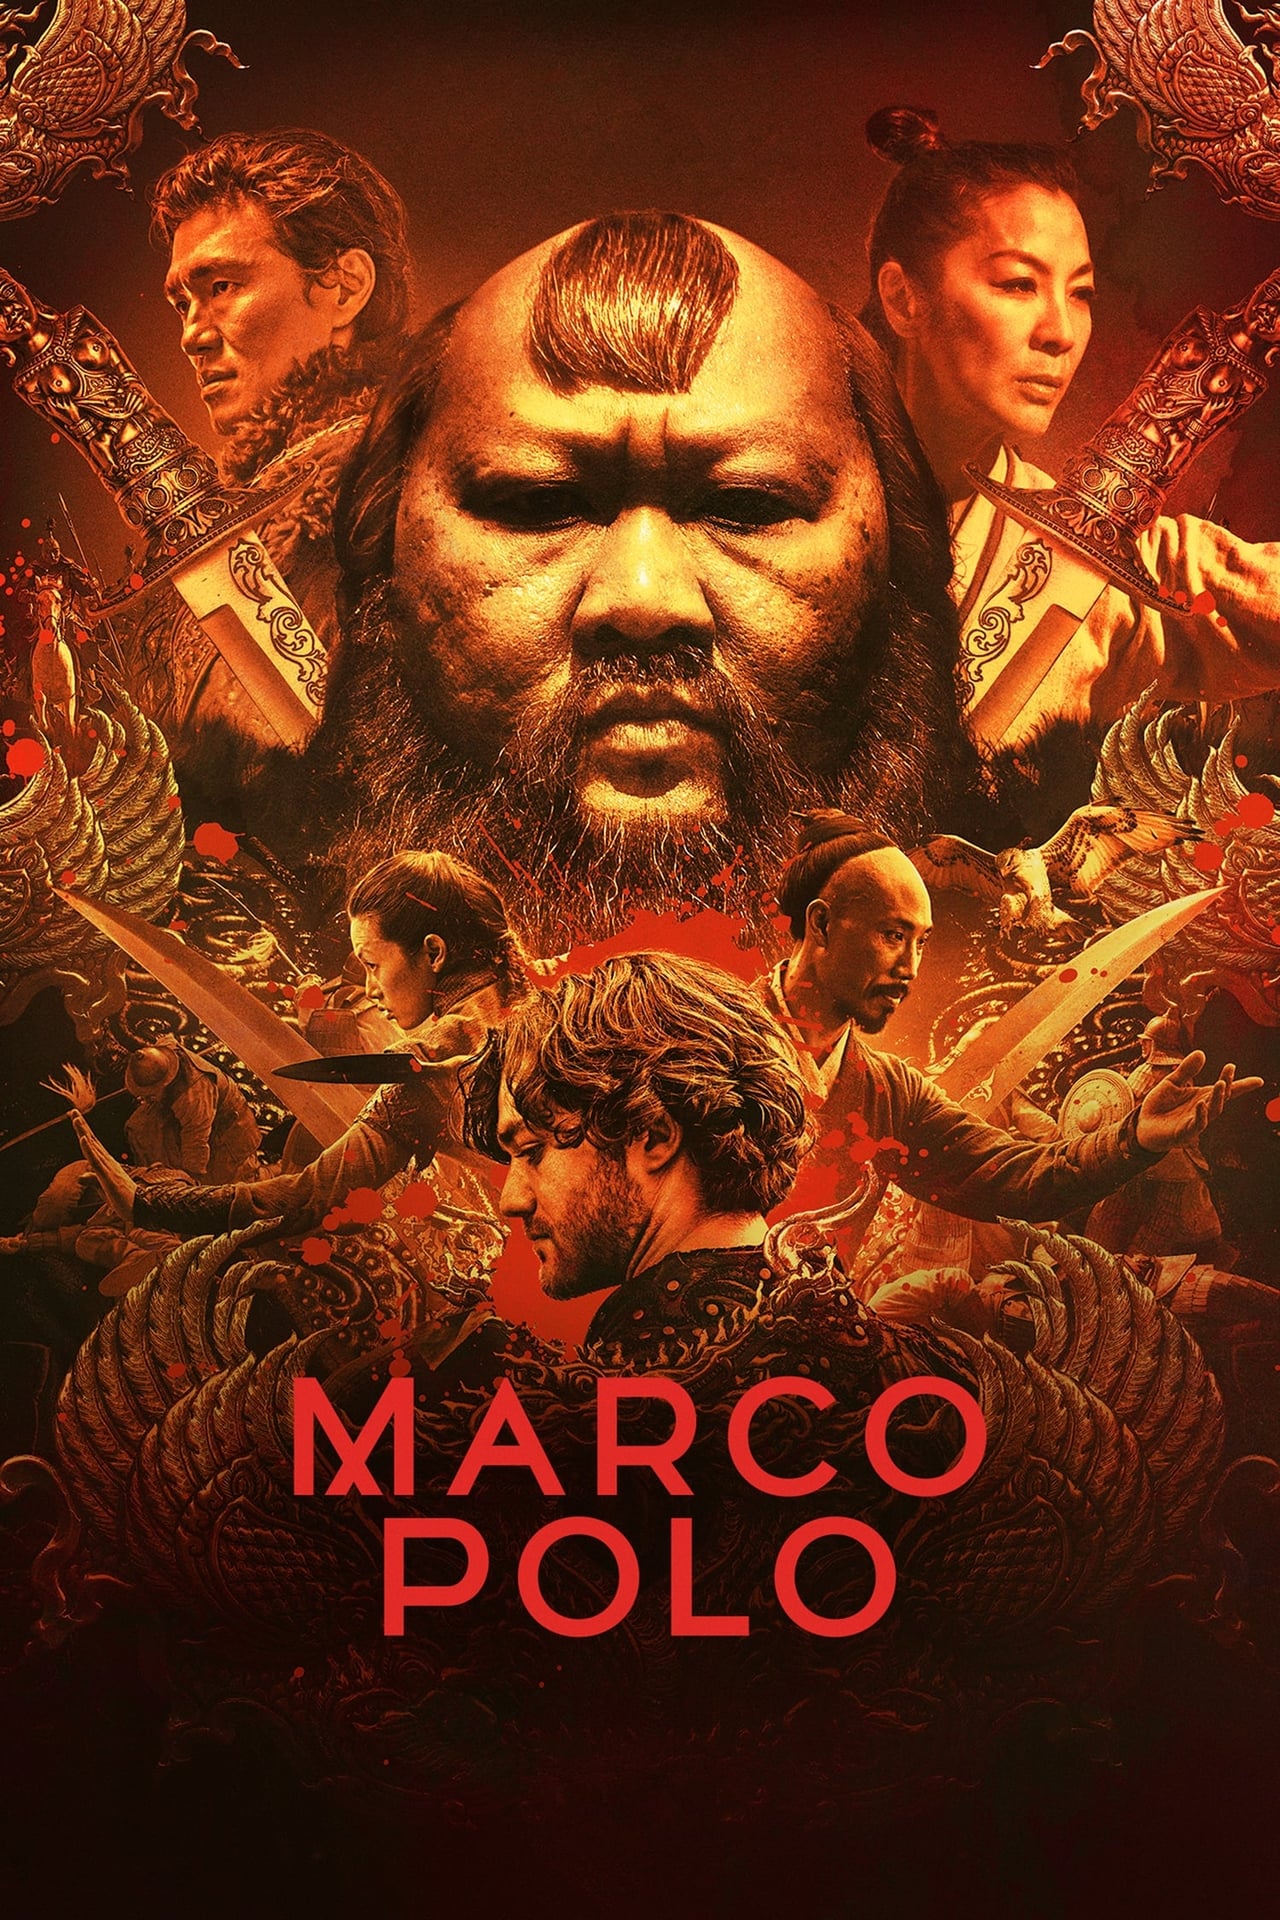 Ver Marco Polo (2014) Online - Pelisplus